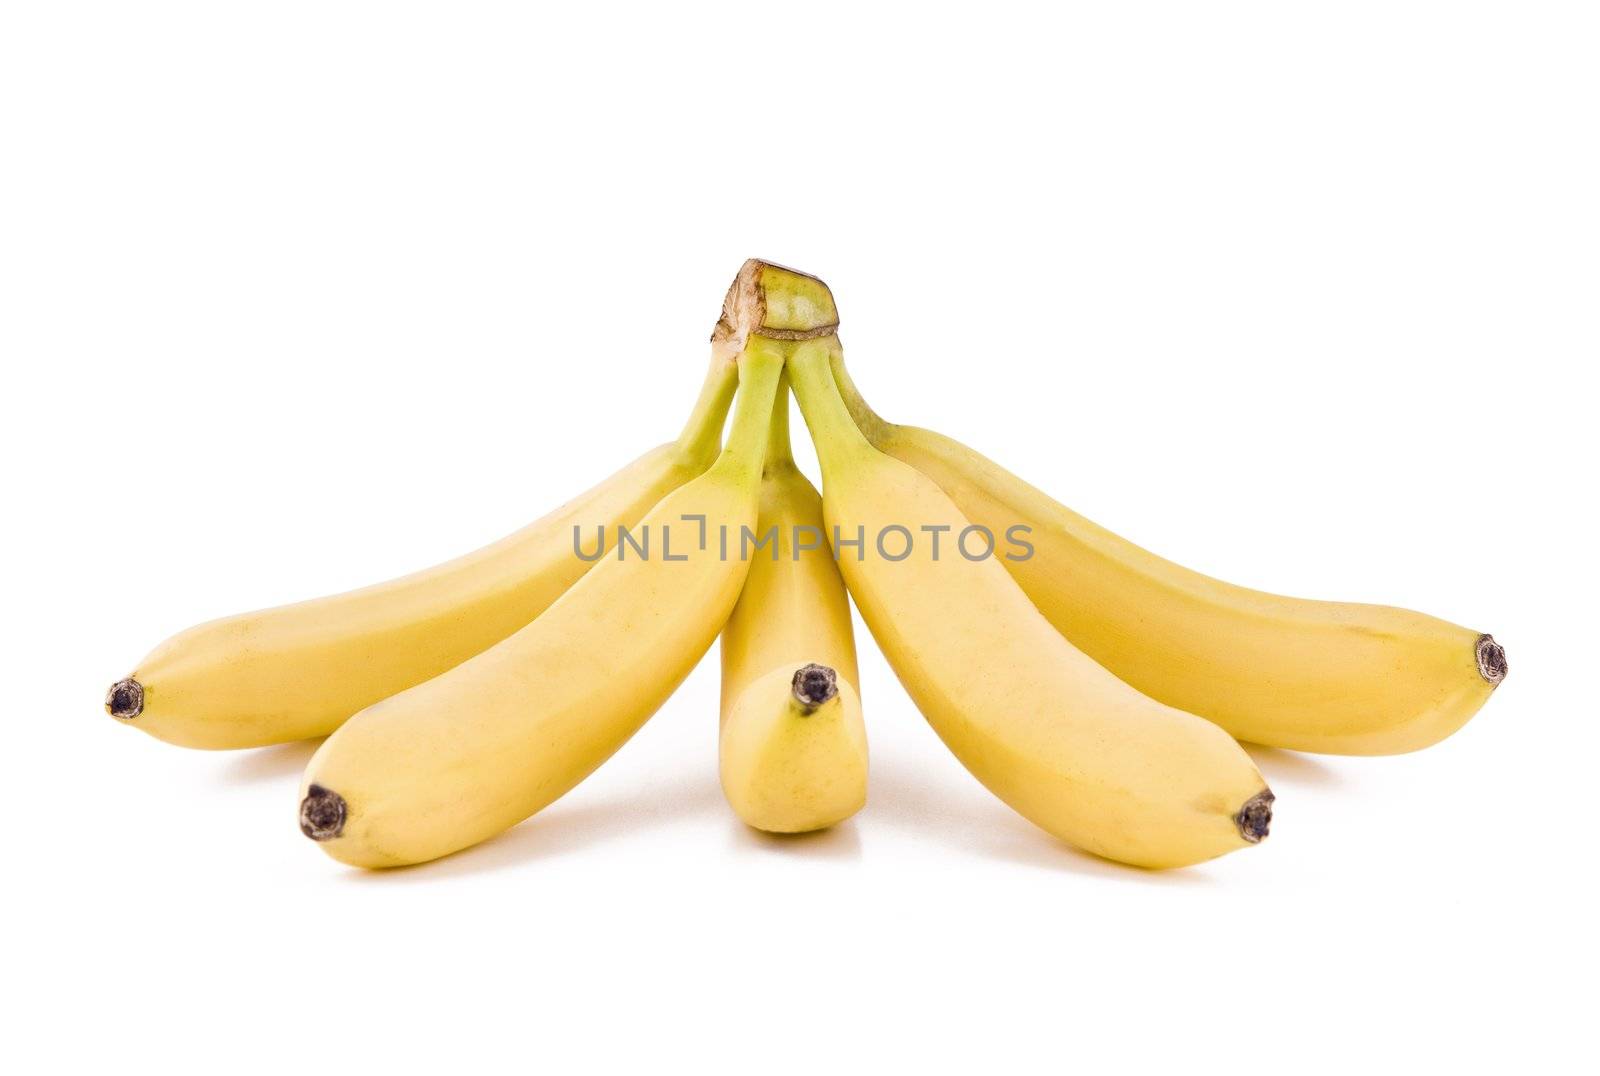 Bunch of five bananas by Gbuglok